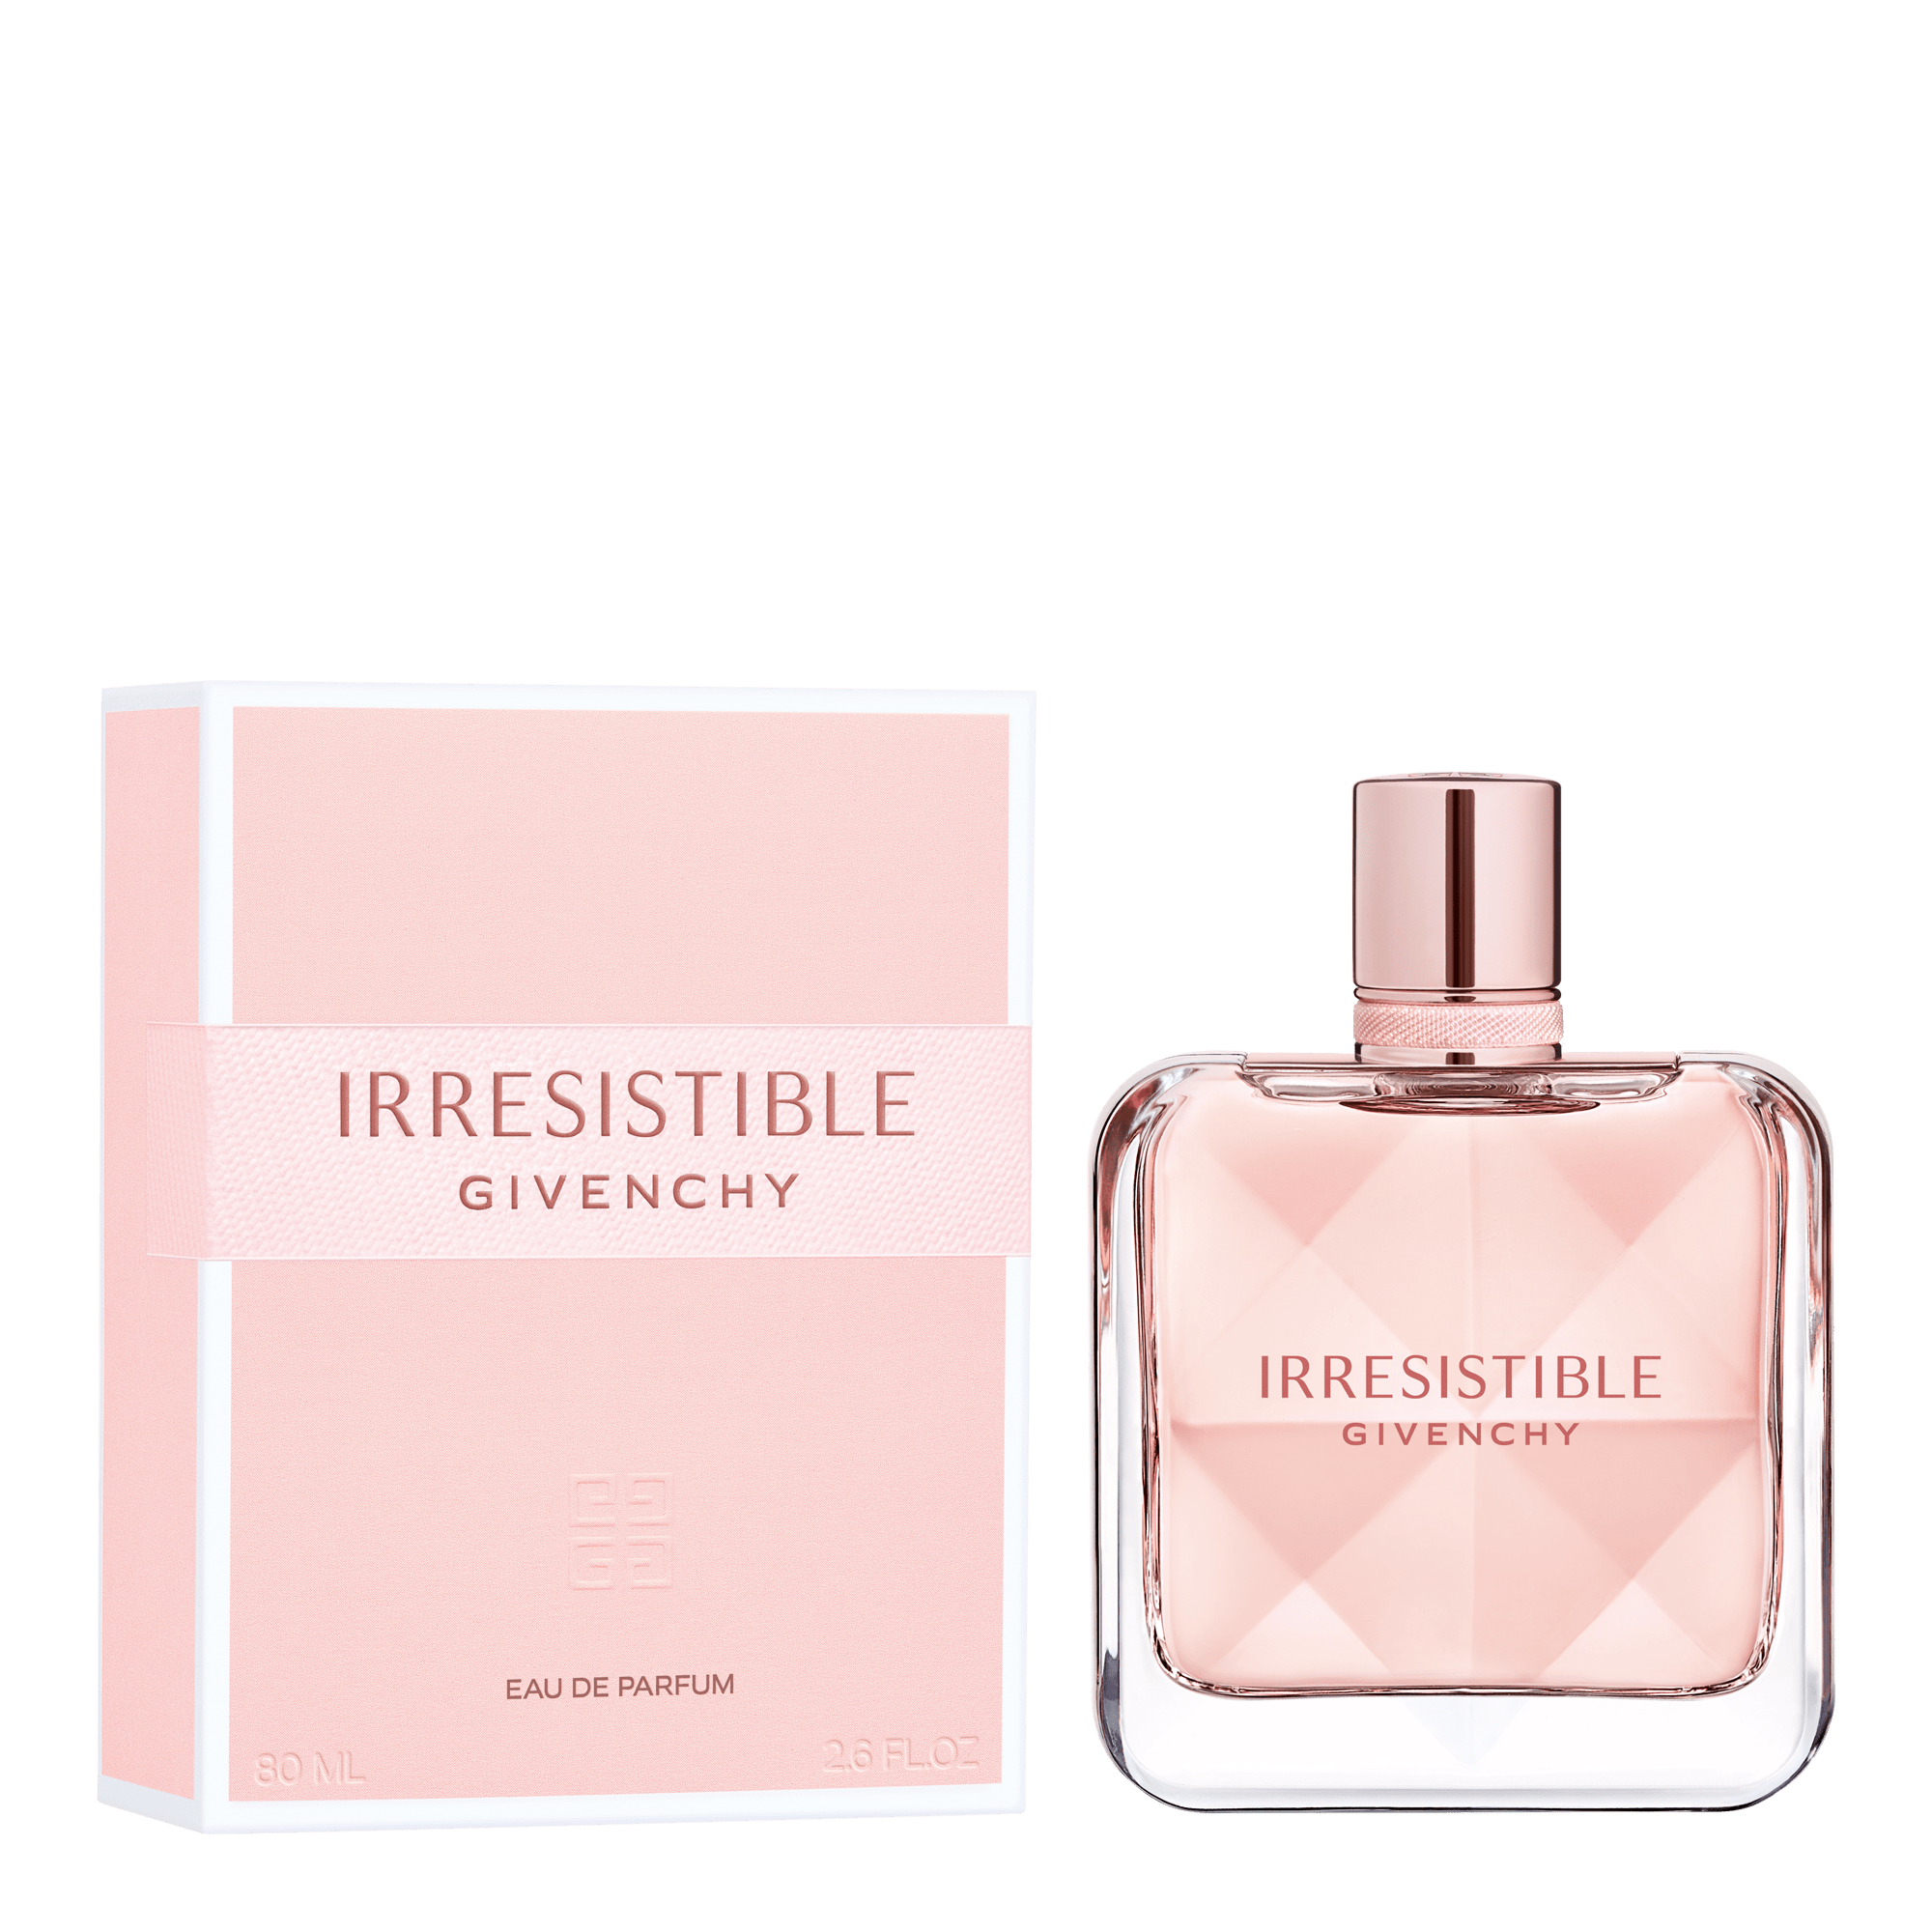 irresistible eau de parfum